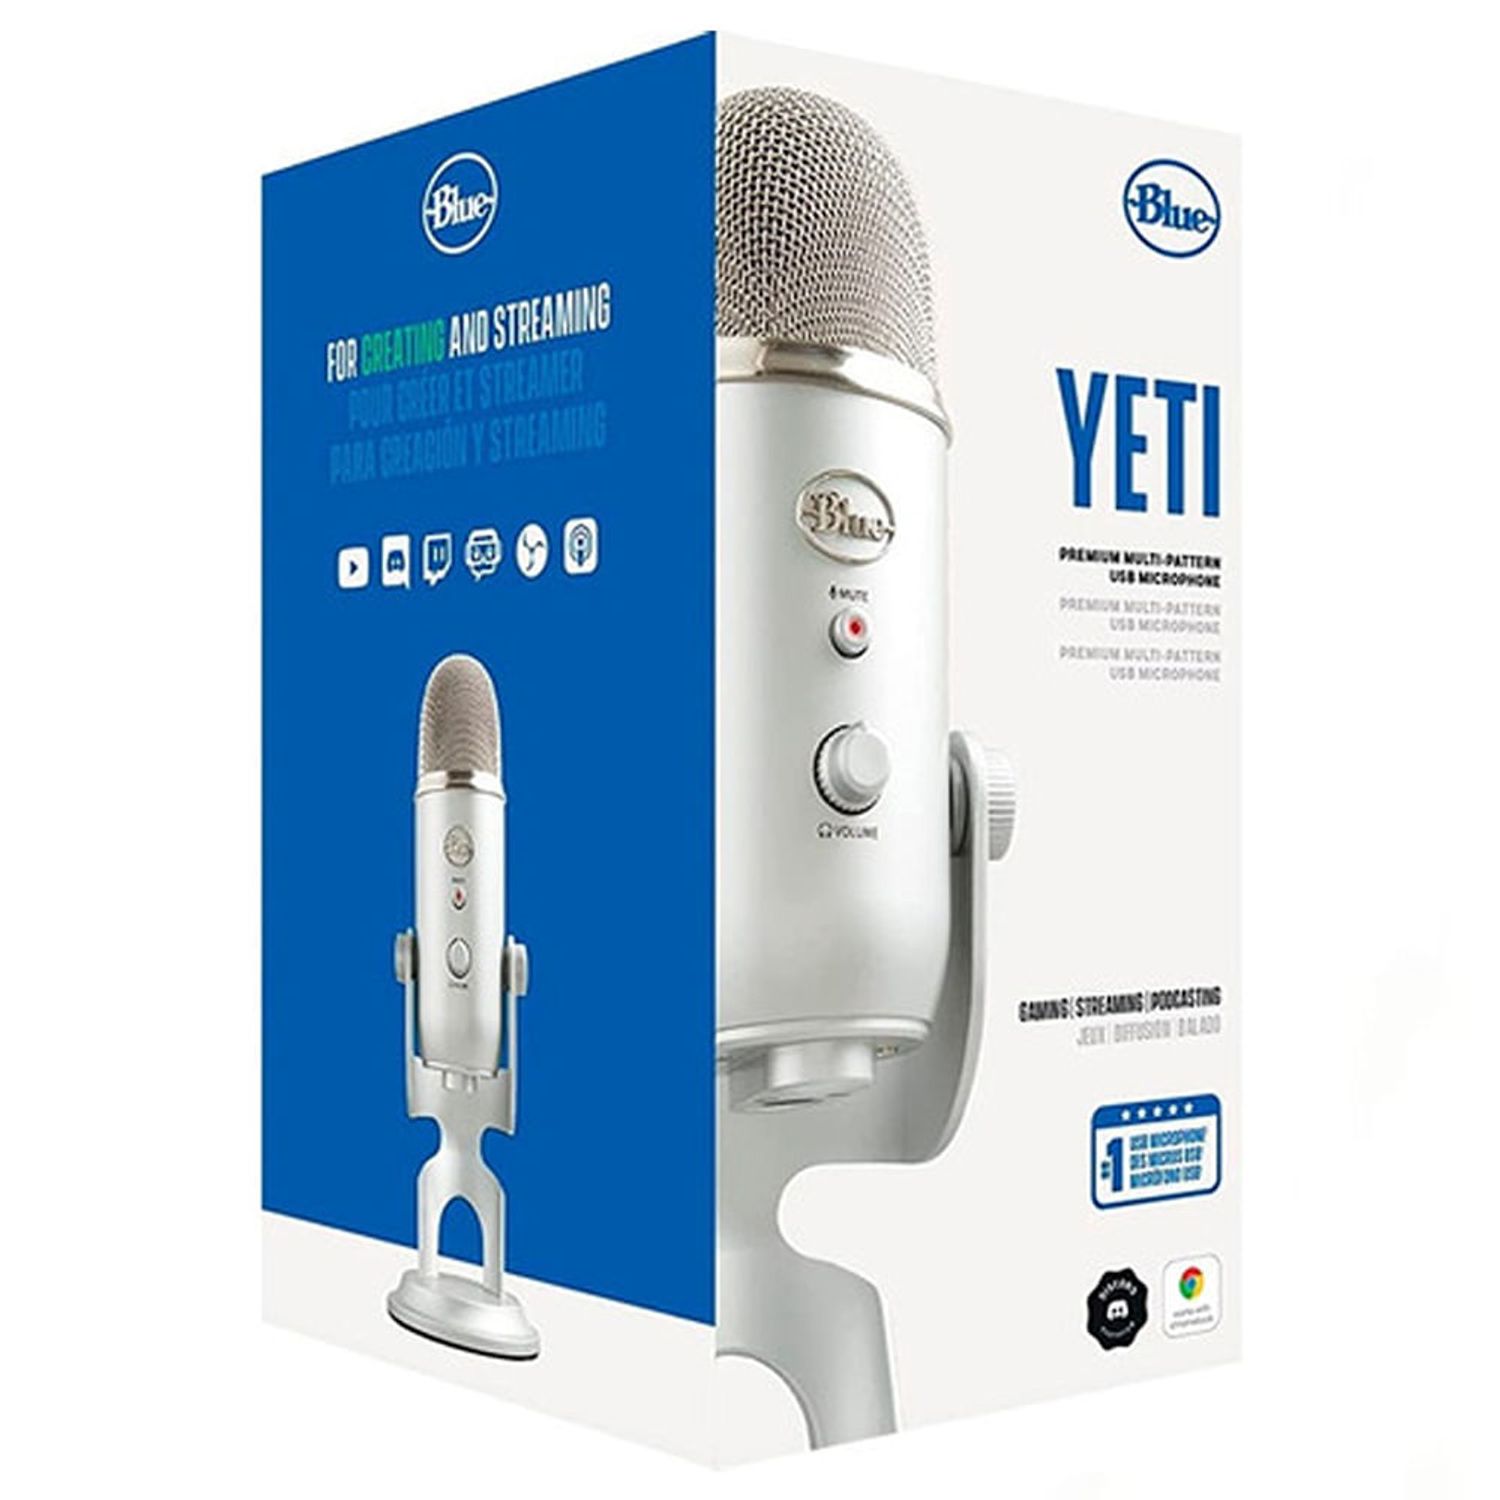 Micrófono USB para grabación Yeti, Blue, plateado